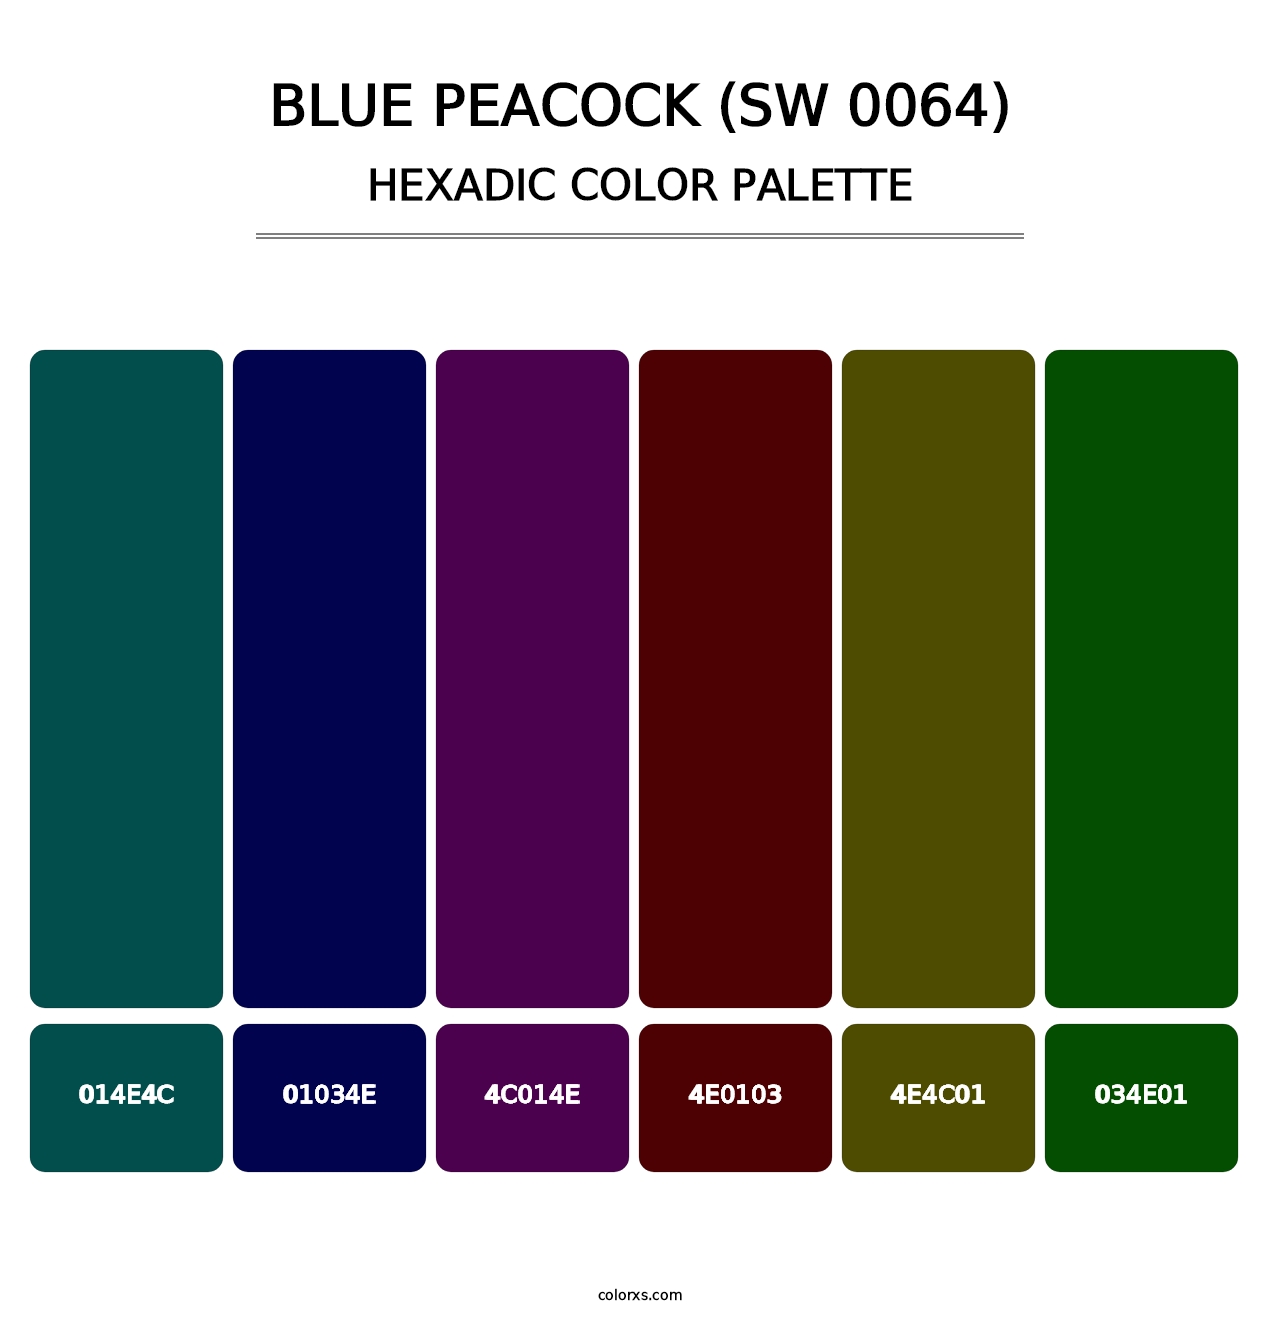 Blue Peacock (SW 0064) - Hexadic Color Palette